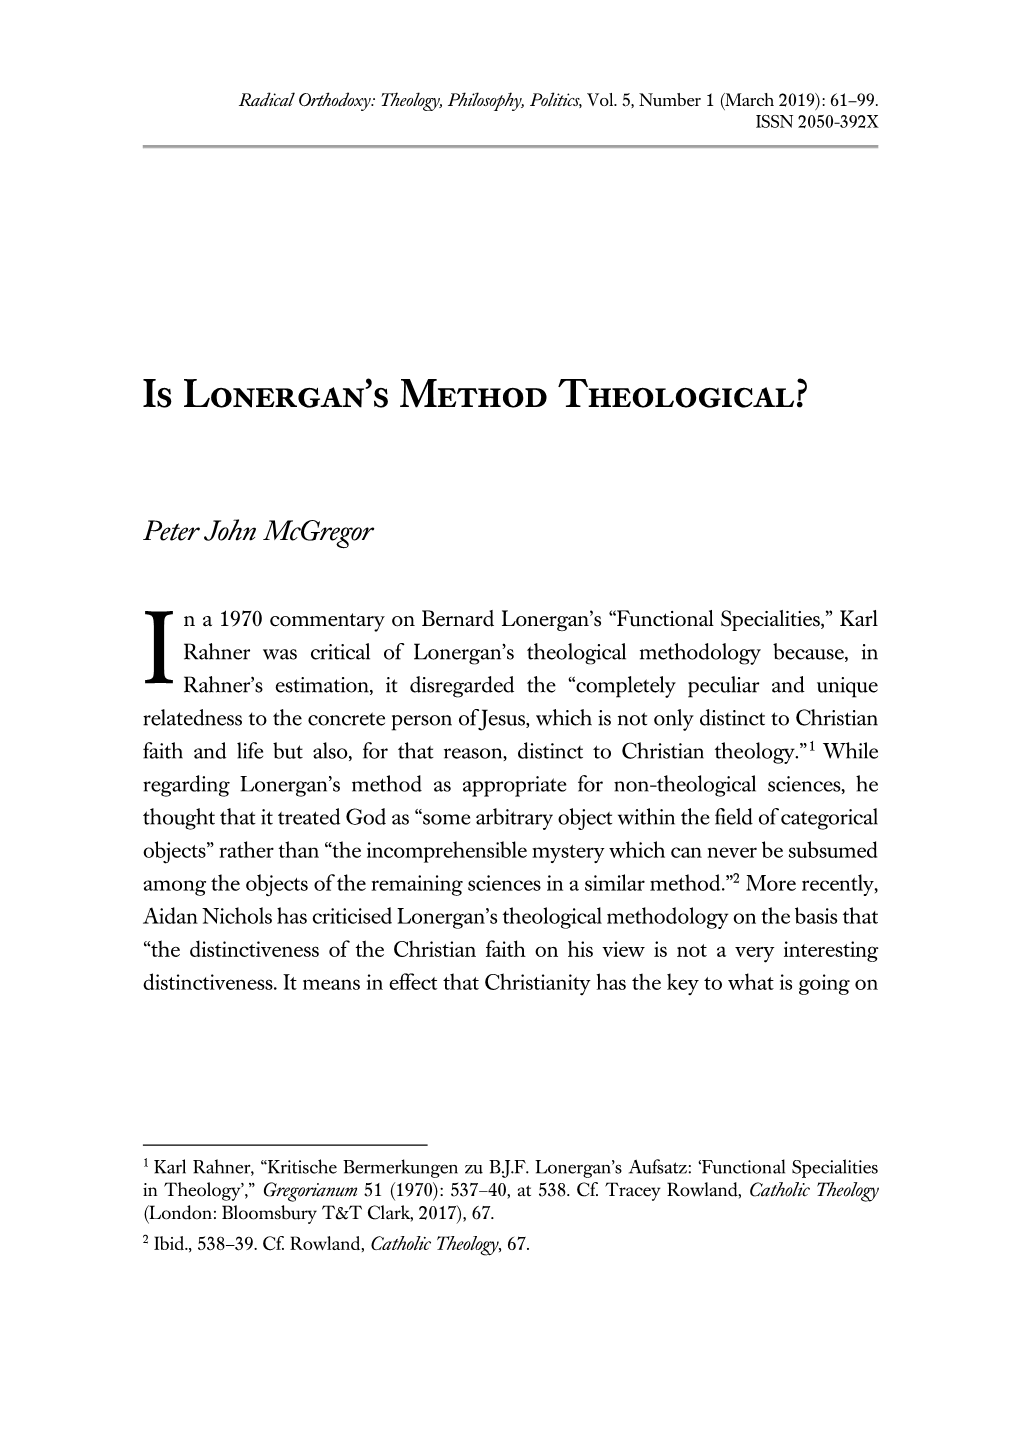 Is Lonergan's Method Theological?